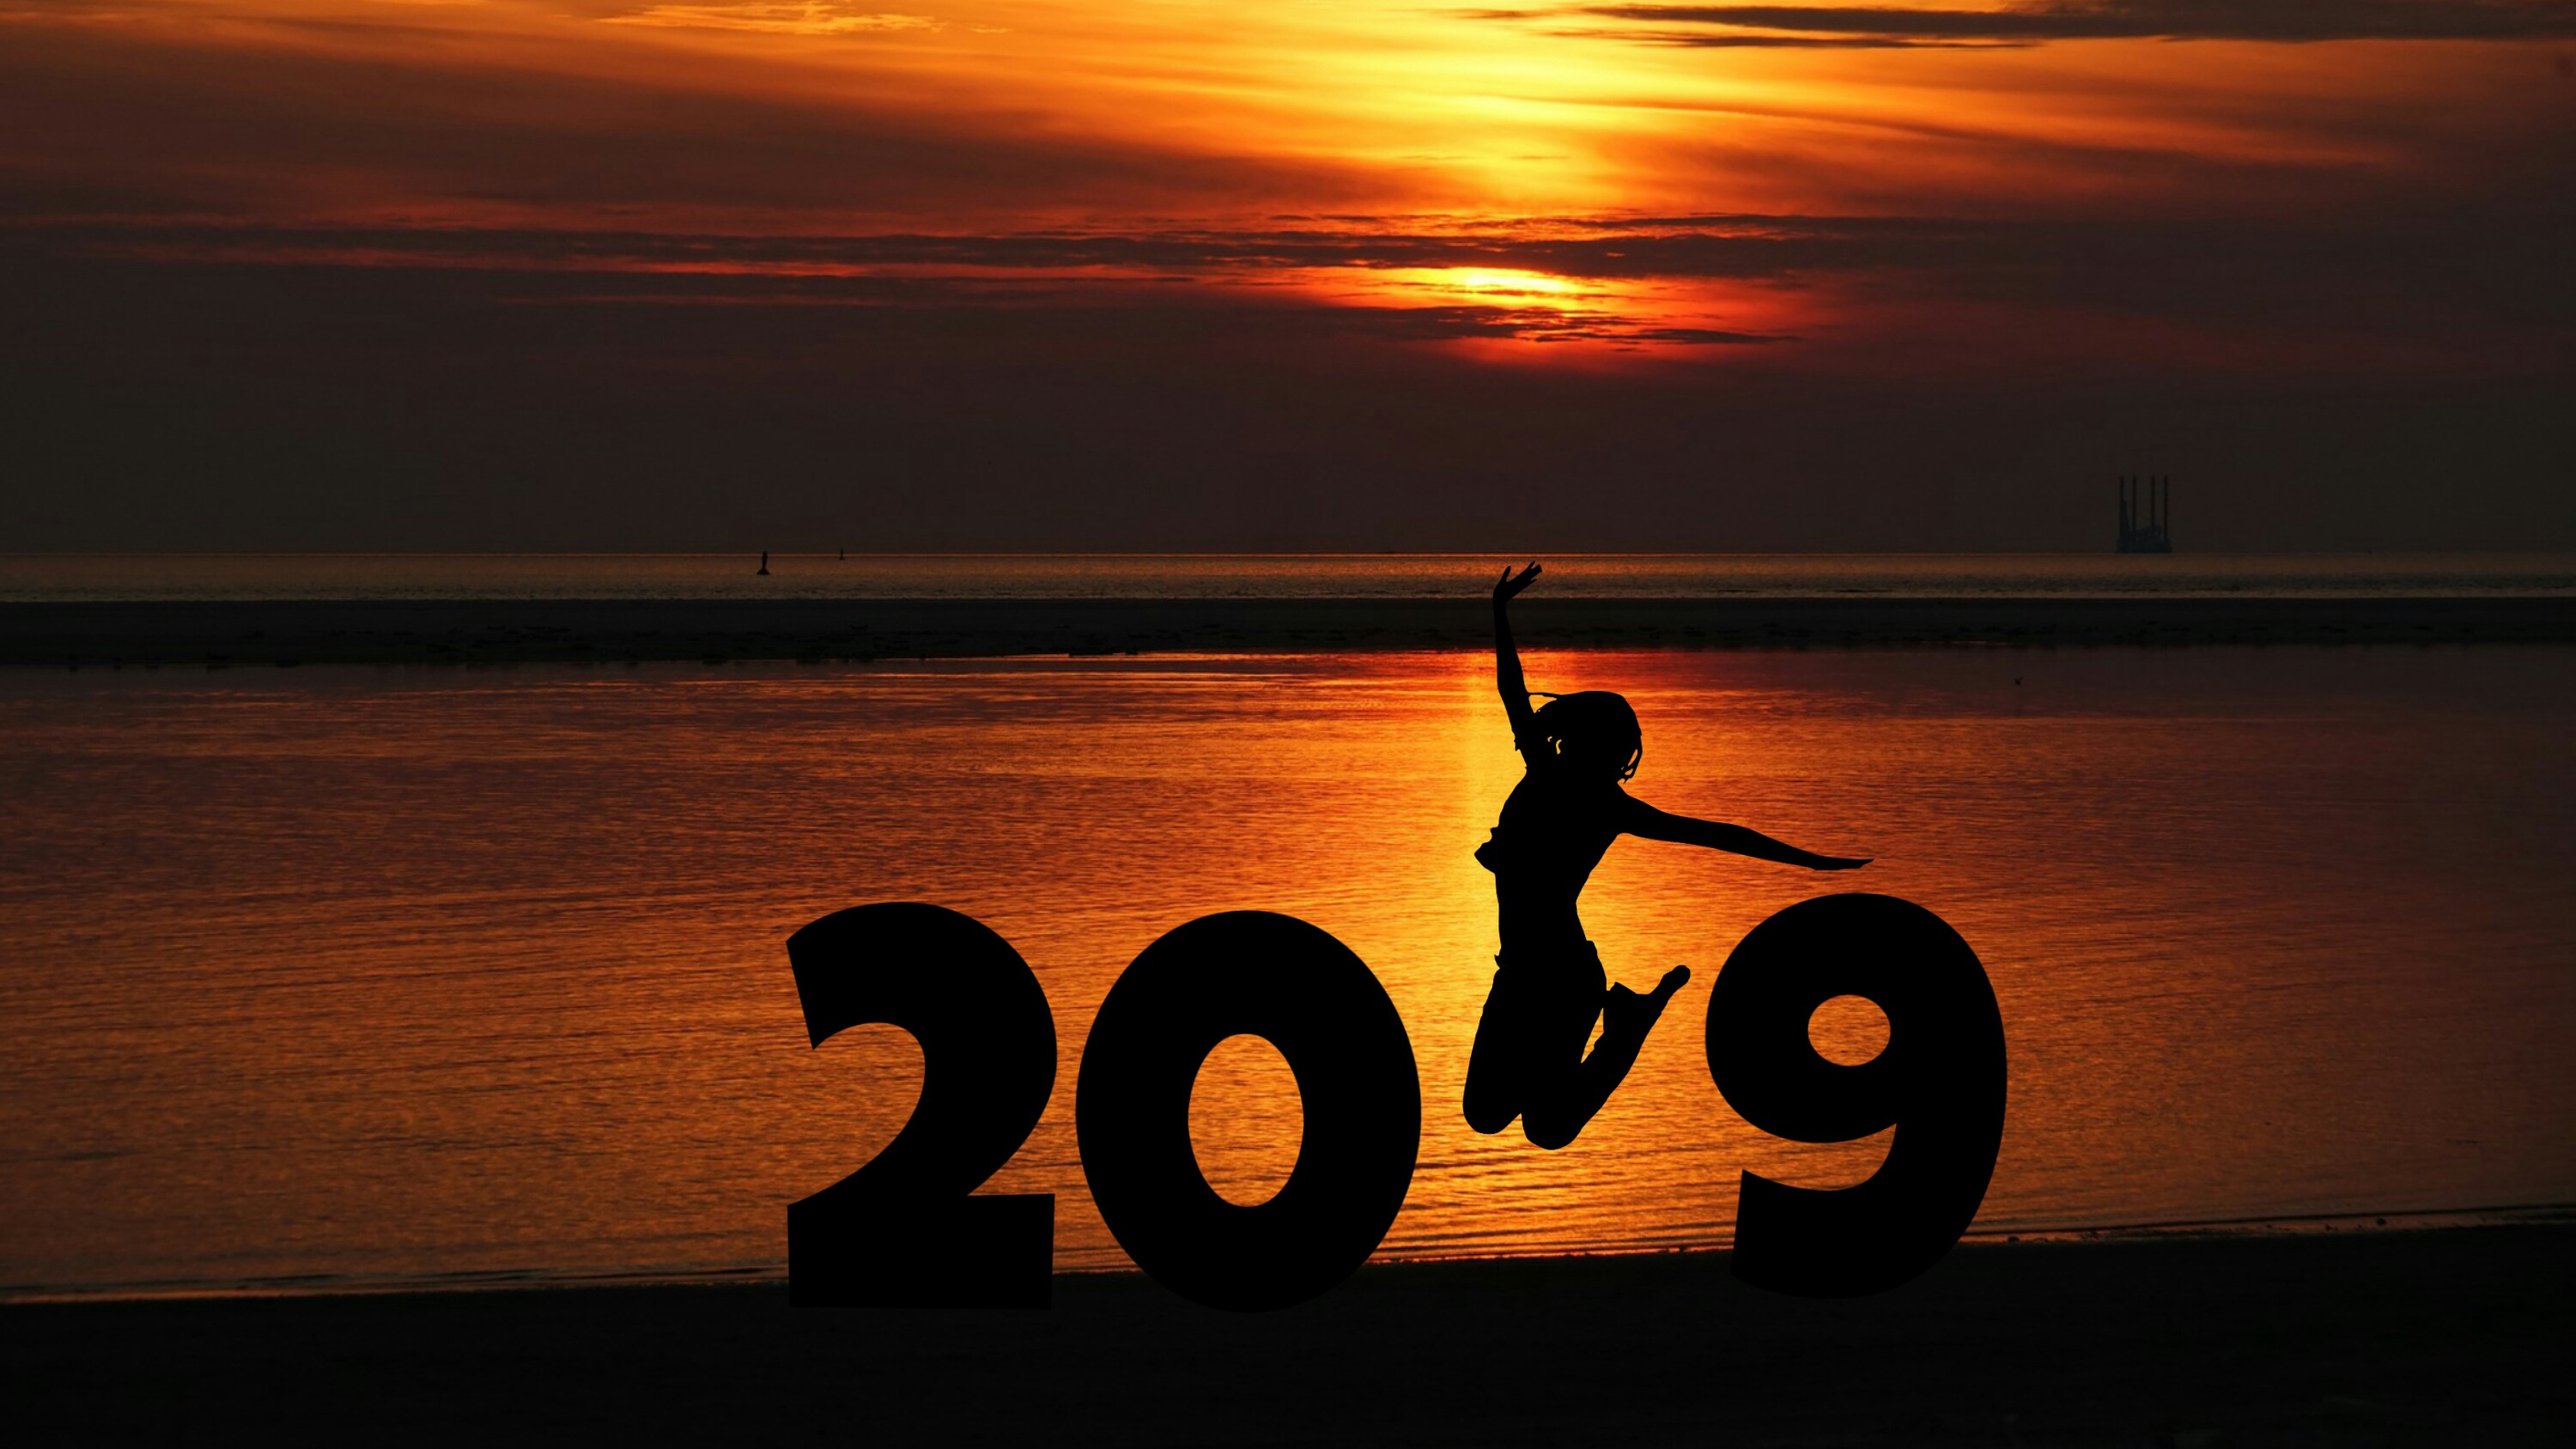 2019 Happy New Year